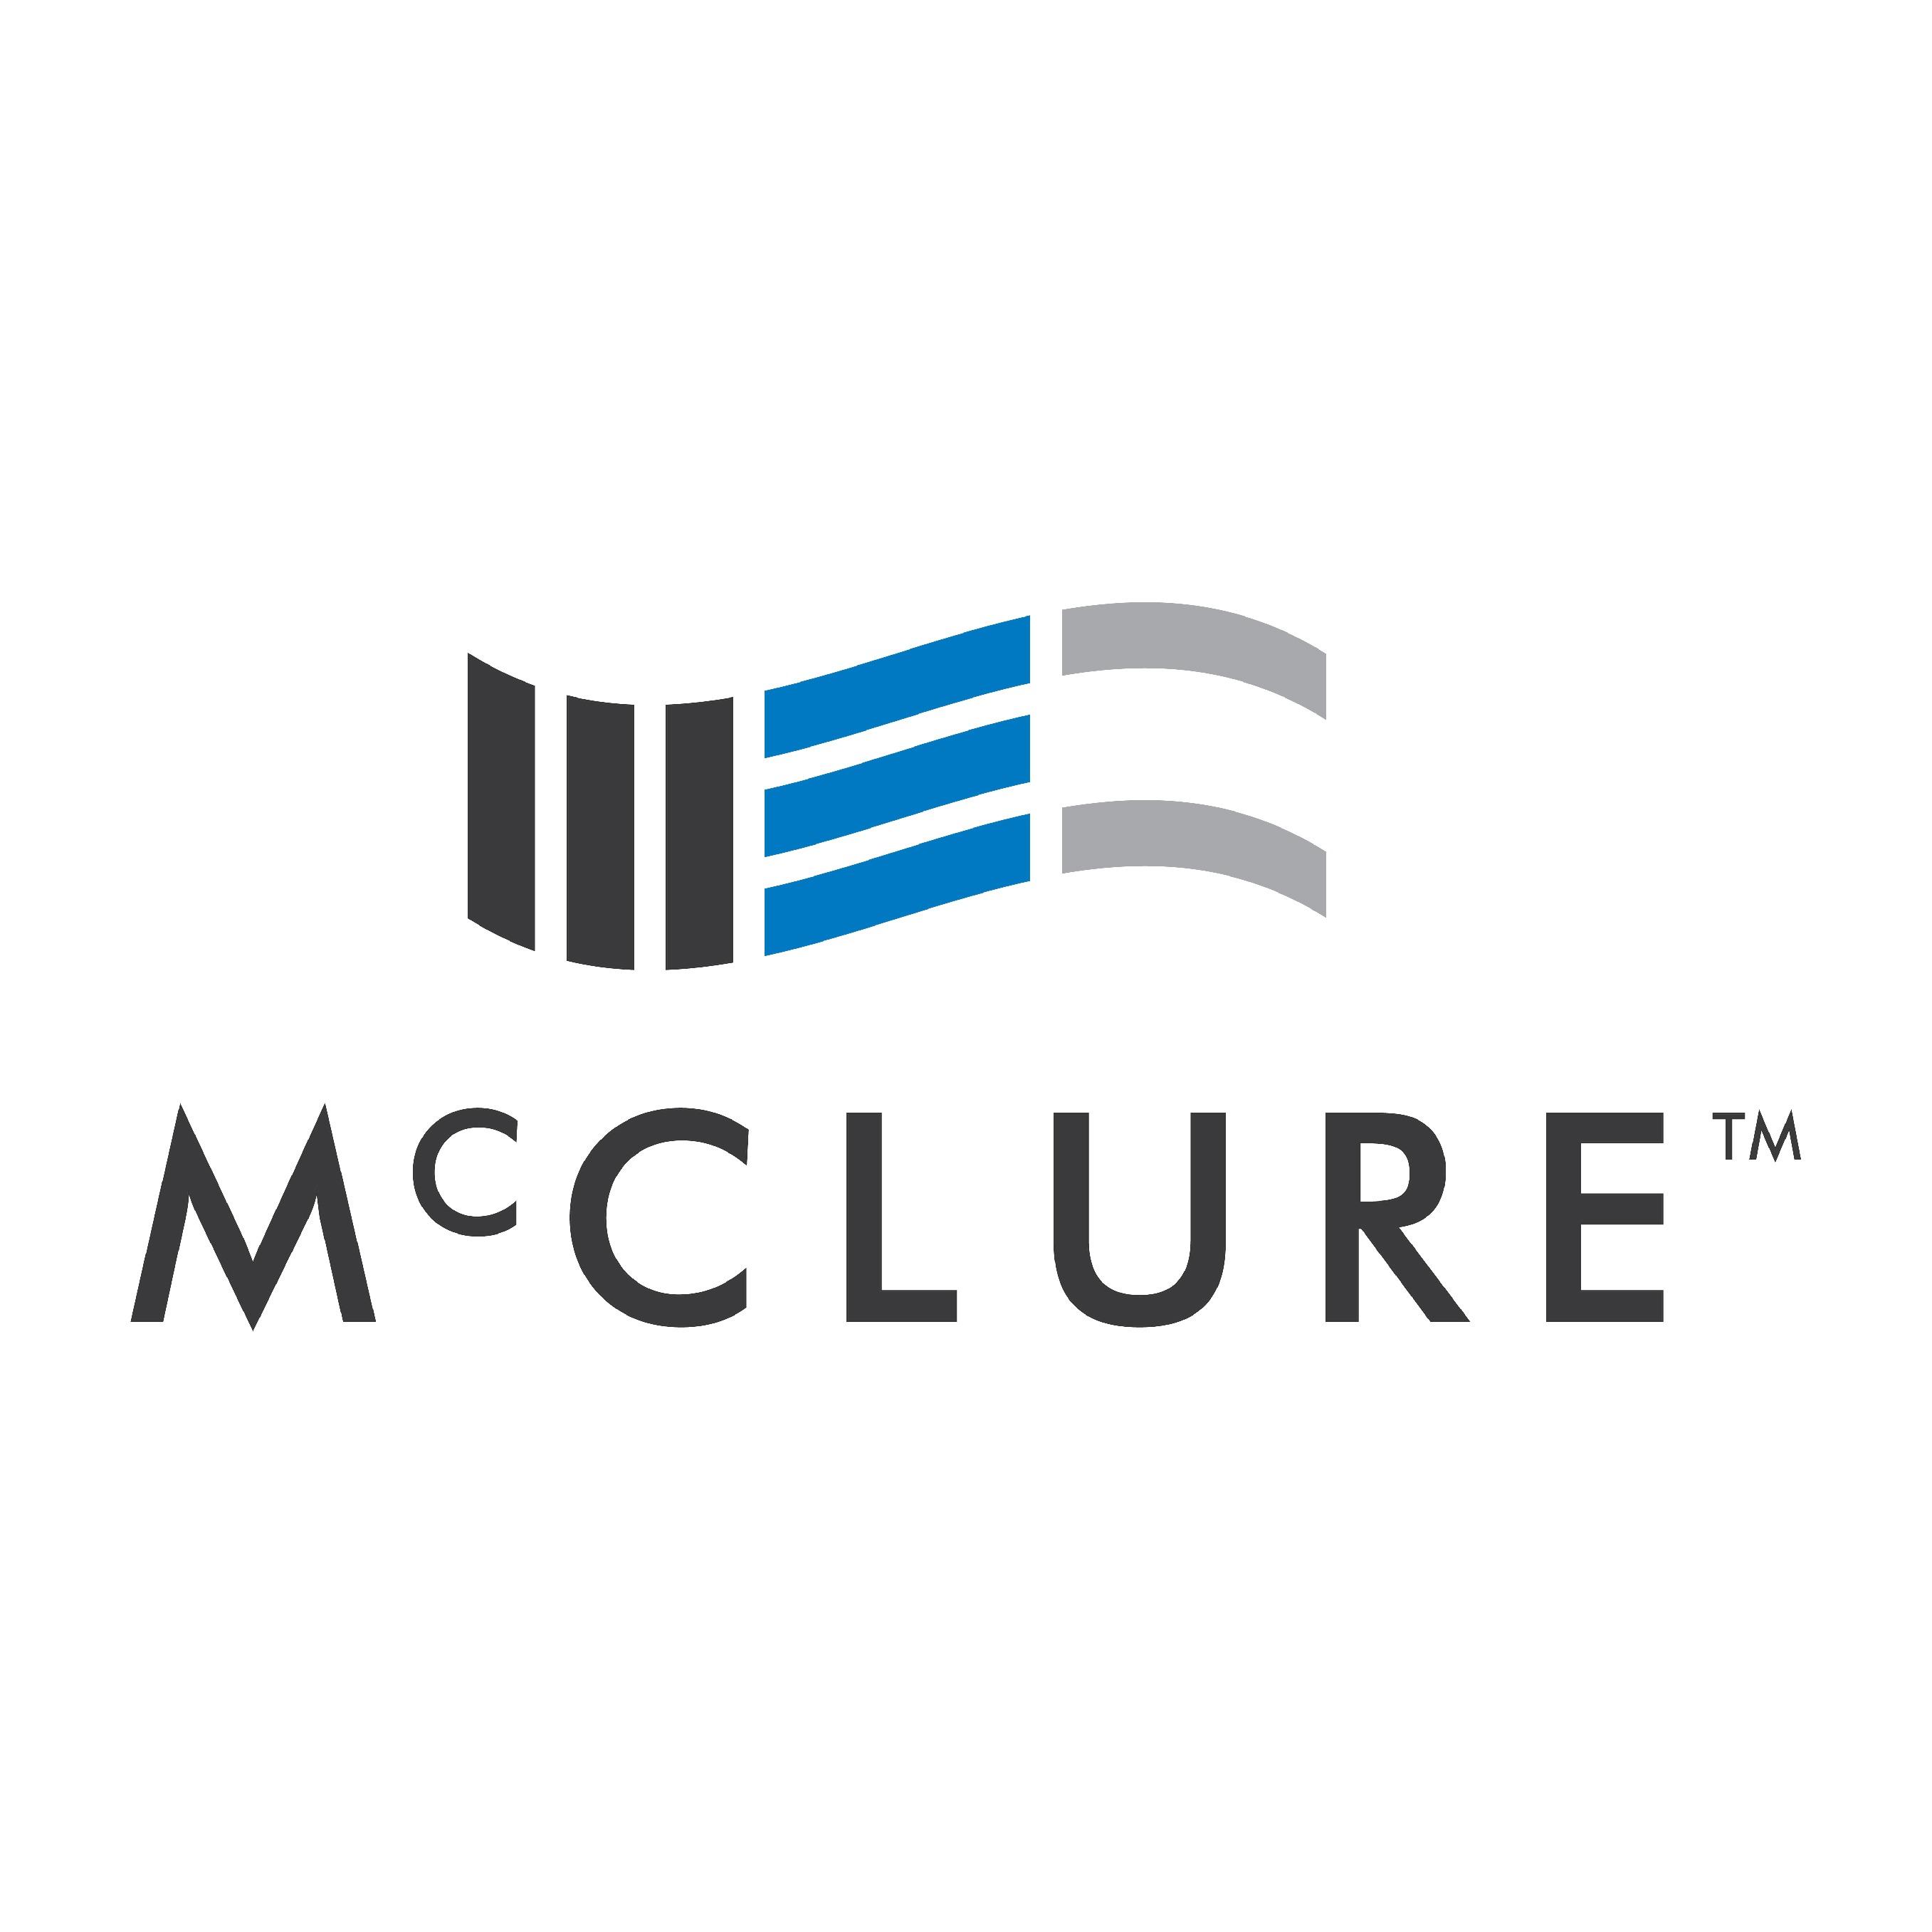 McClure